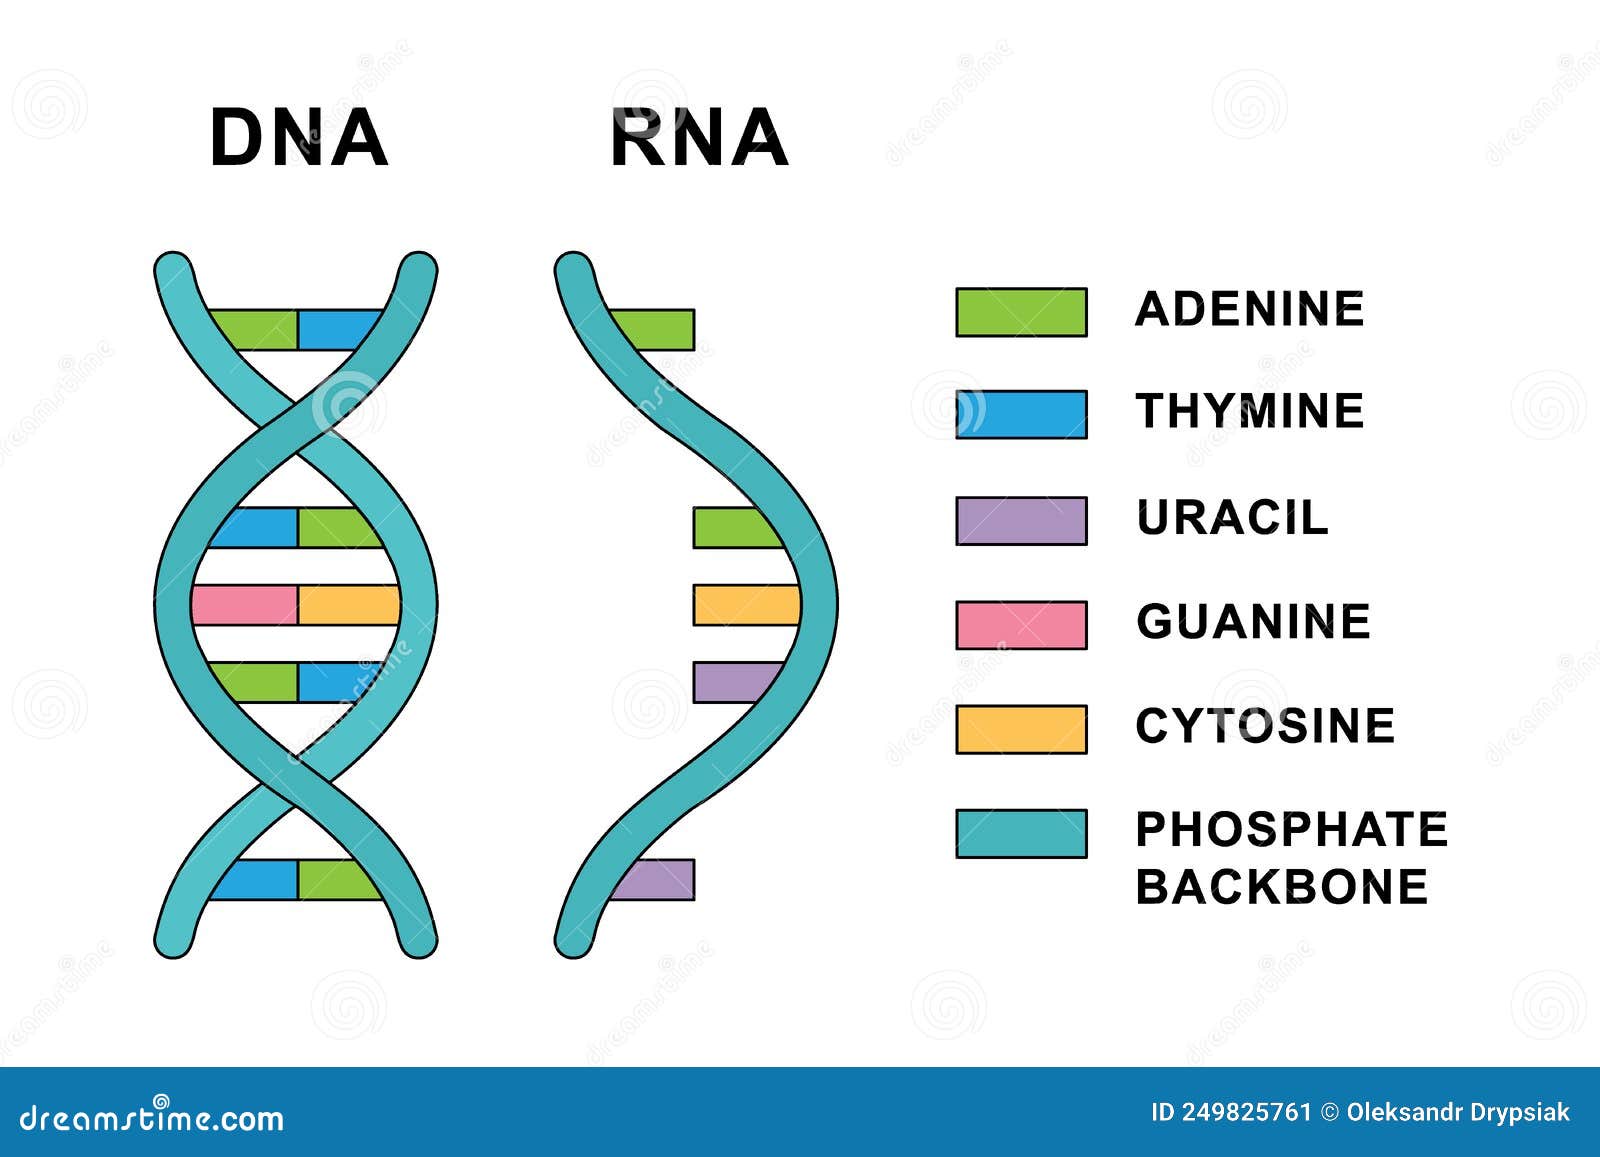 Рнк гуанин цитозин. ДНК аденин гуанин цитозин Тимин. Молекула РНК. ДНК РНК урацил. ДНК И РНК аденин Тимин гуанин цитозин урацил.